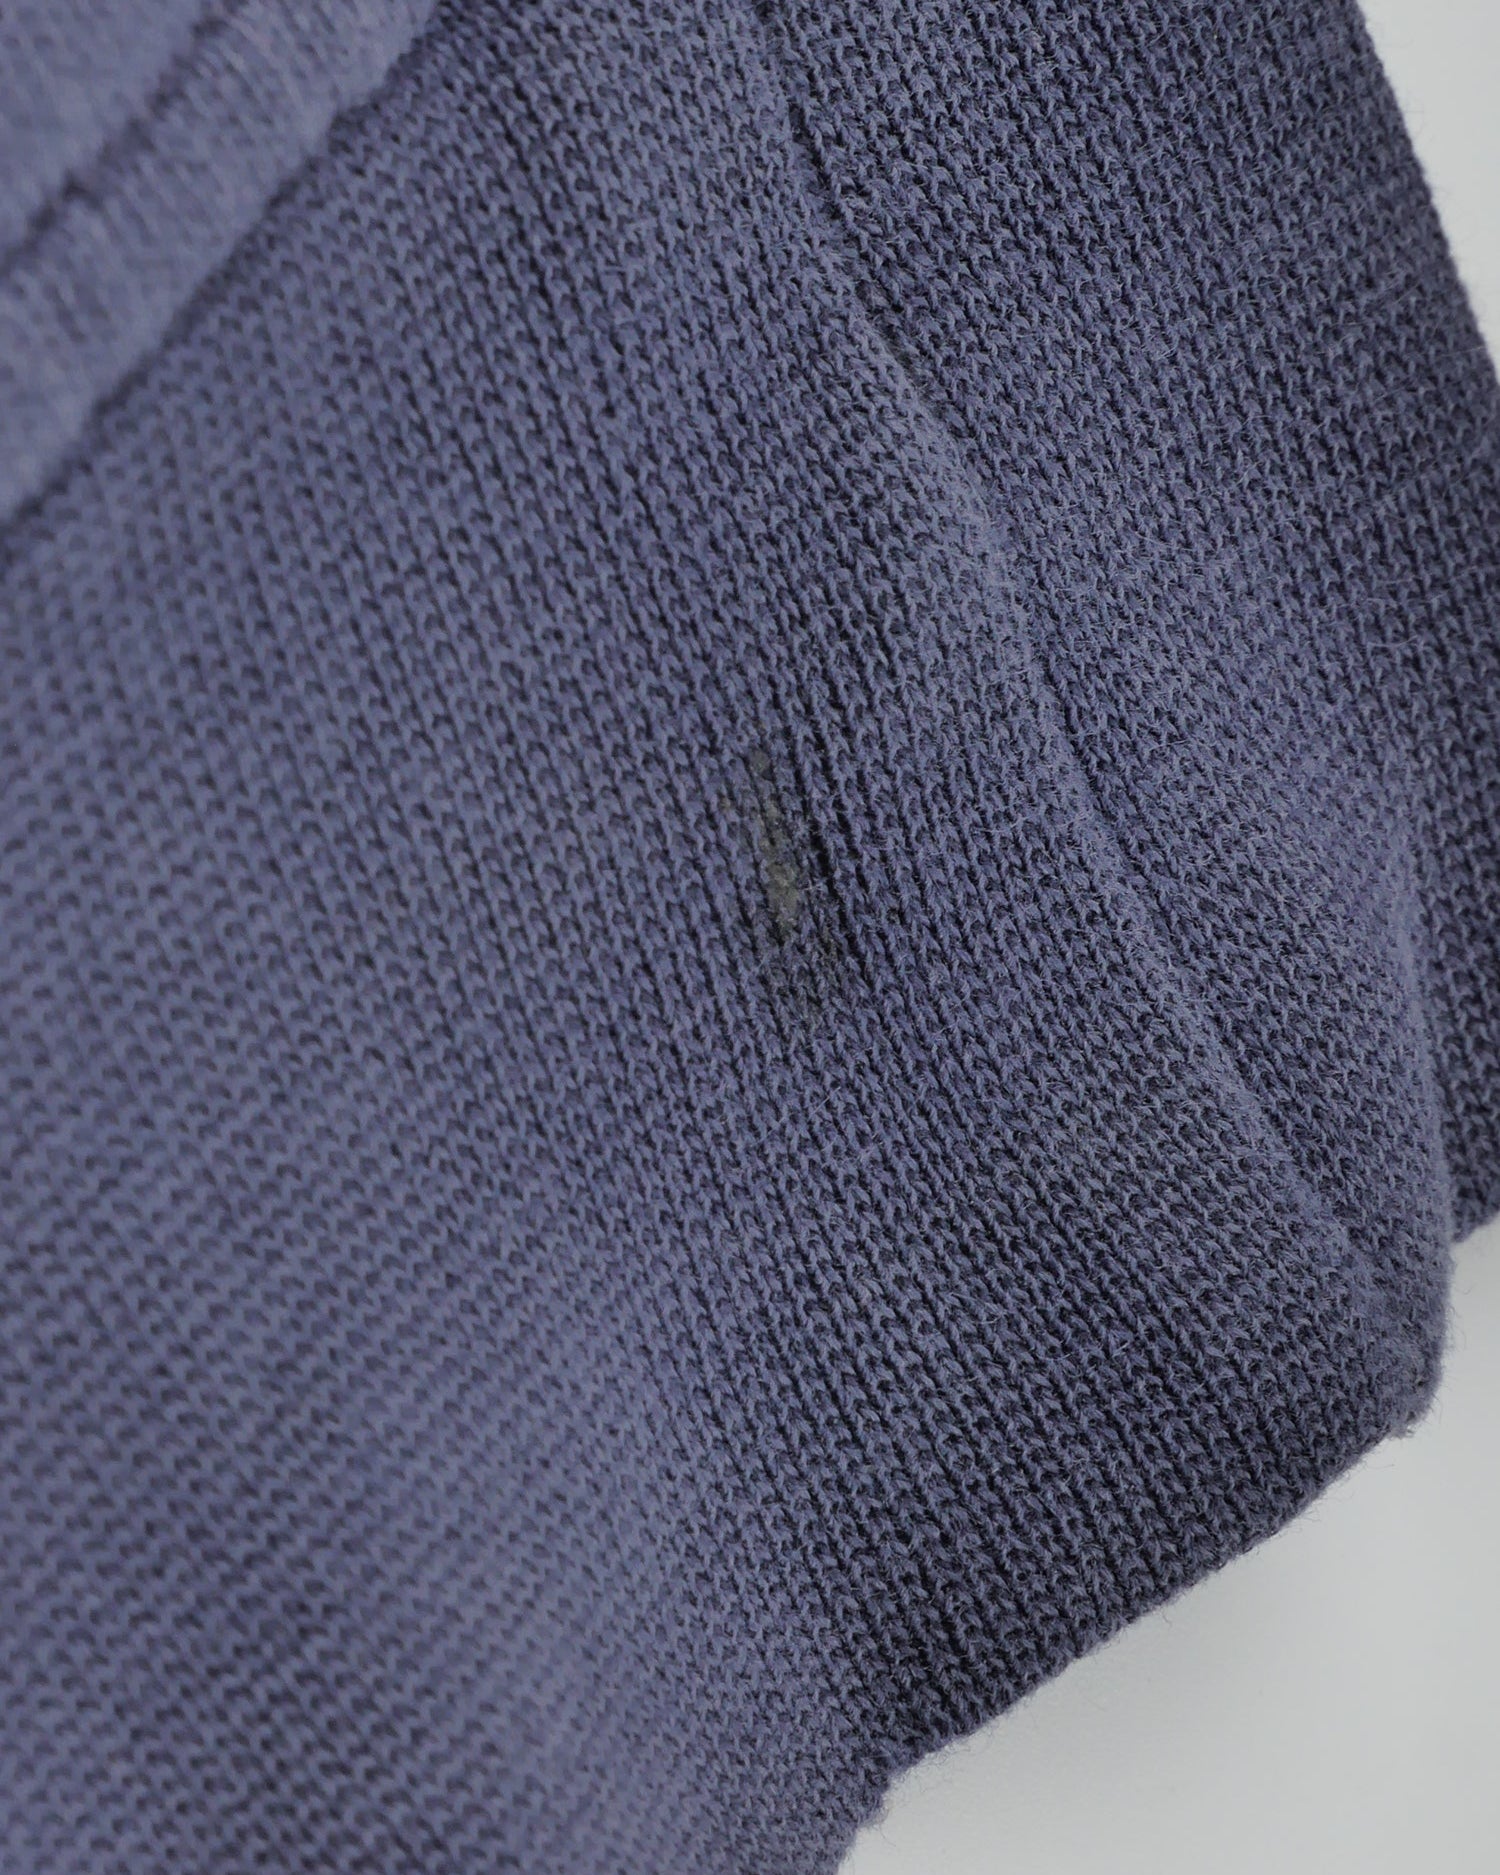 Asics blau Polo Shirt - Peeces